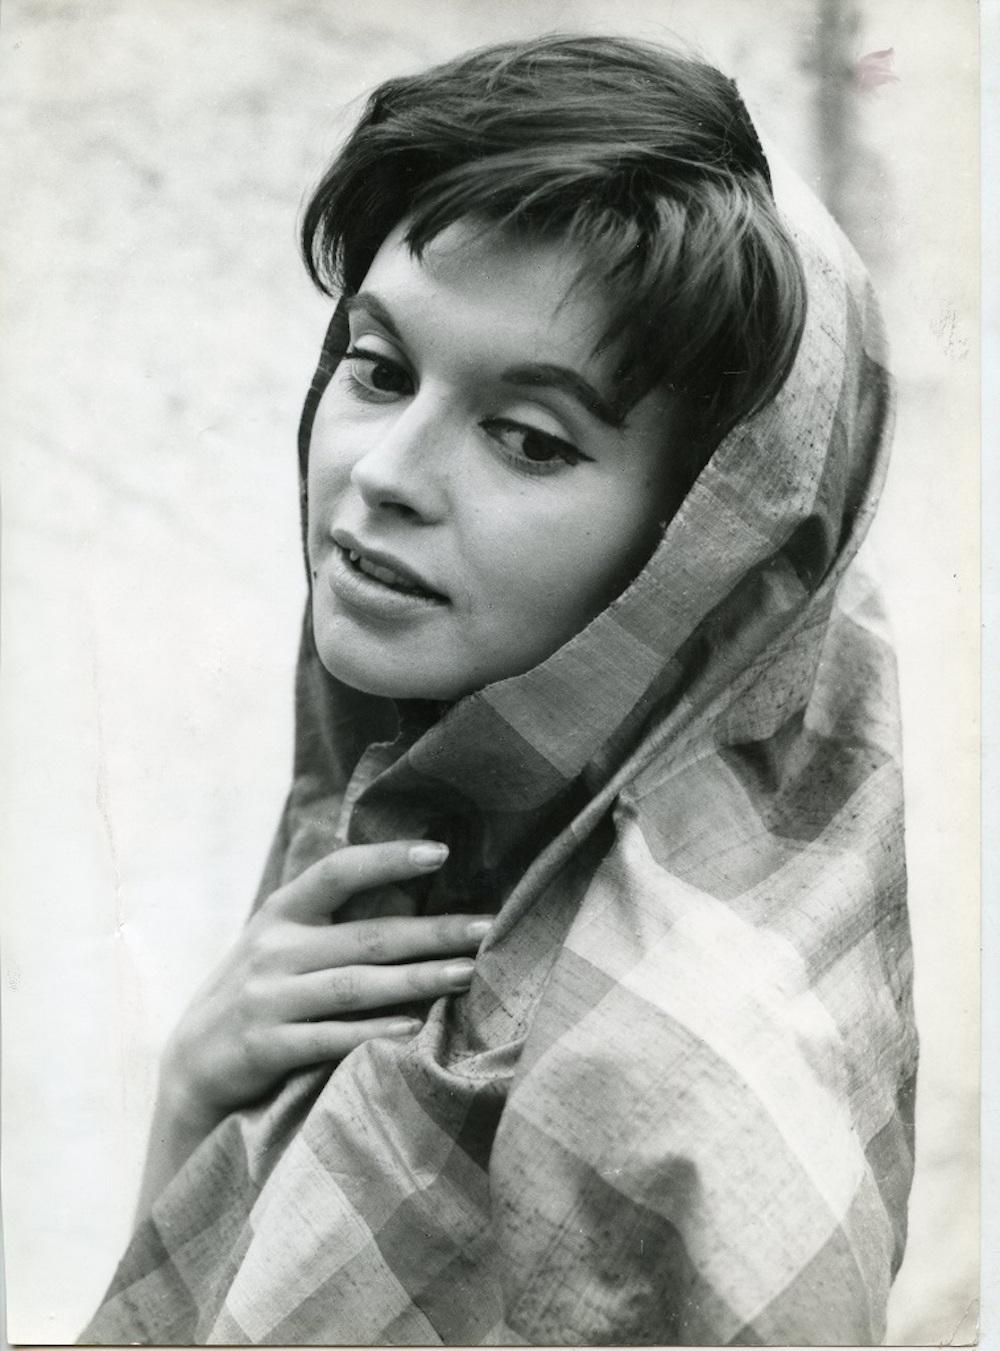 Unknown Portrait Photograph - Portrait of Yvonne Monlaur by Franco Pinna -  Vintage B/w Photo - 1960s